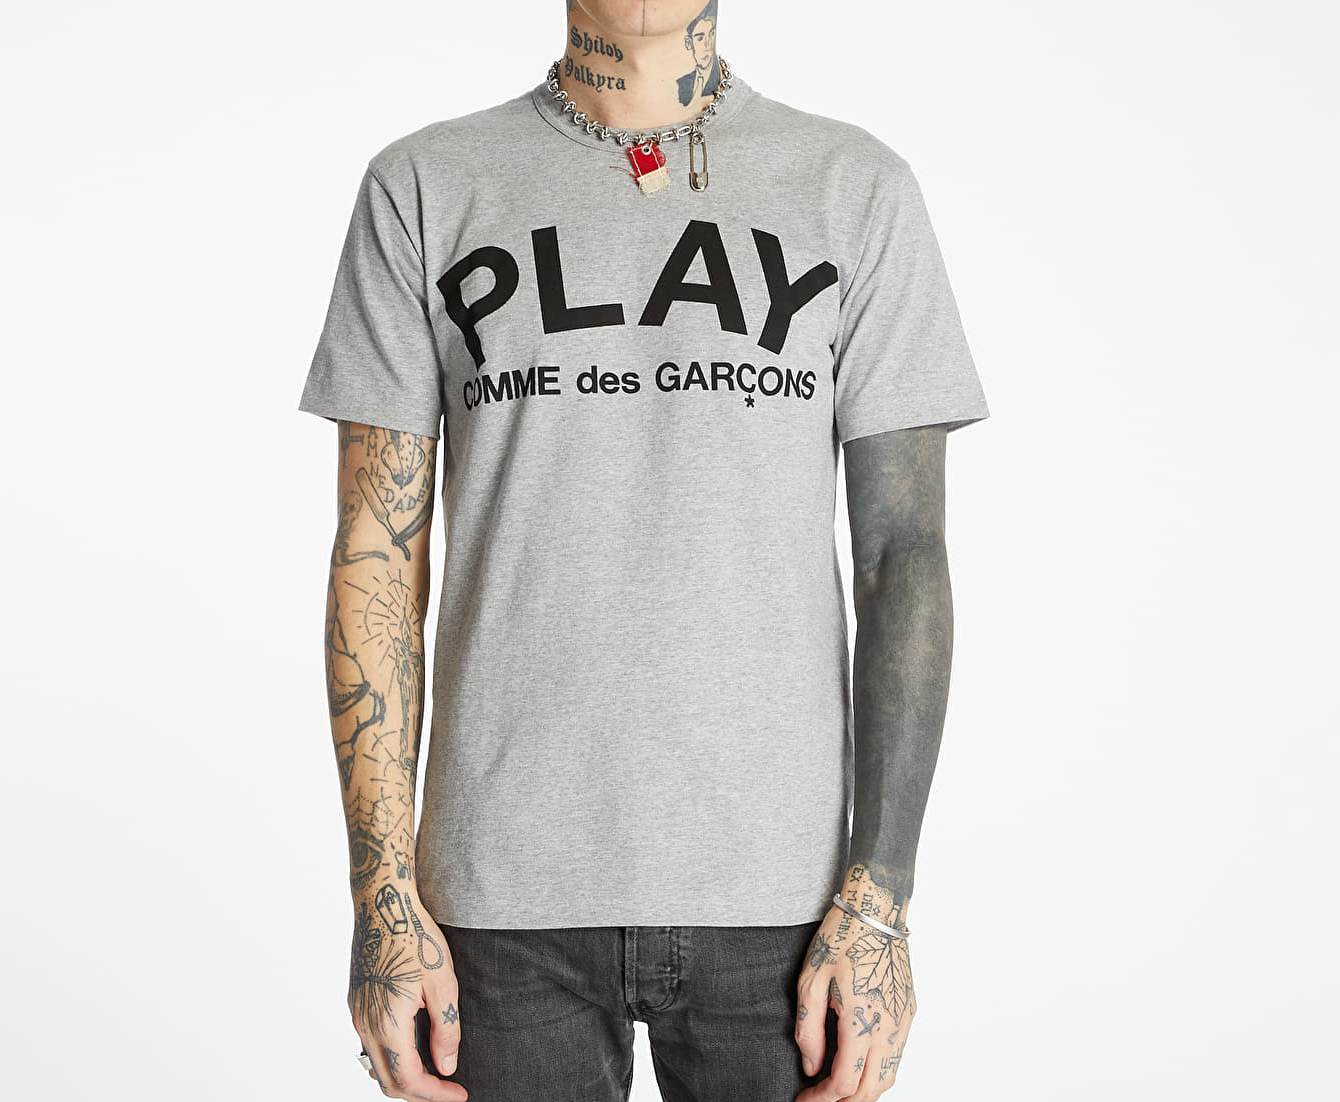 Comme des Garçons PLAY T-Shirt - Grey/Black